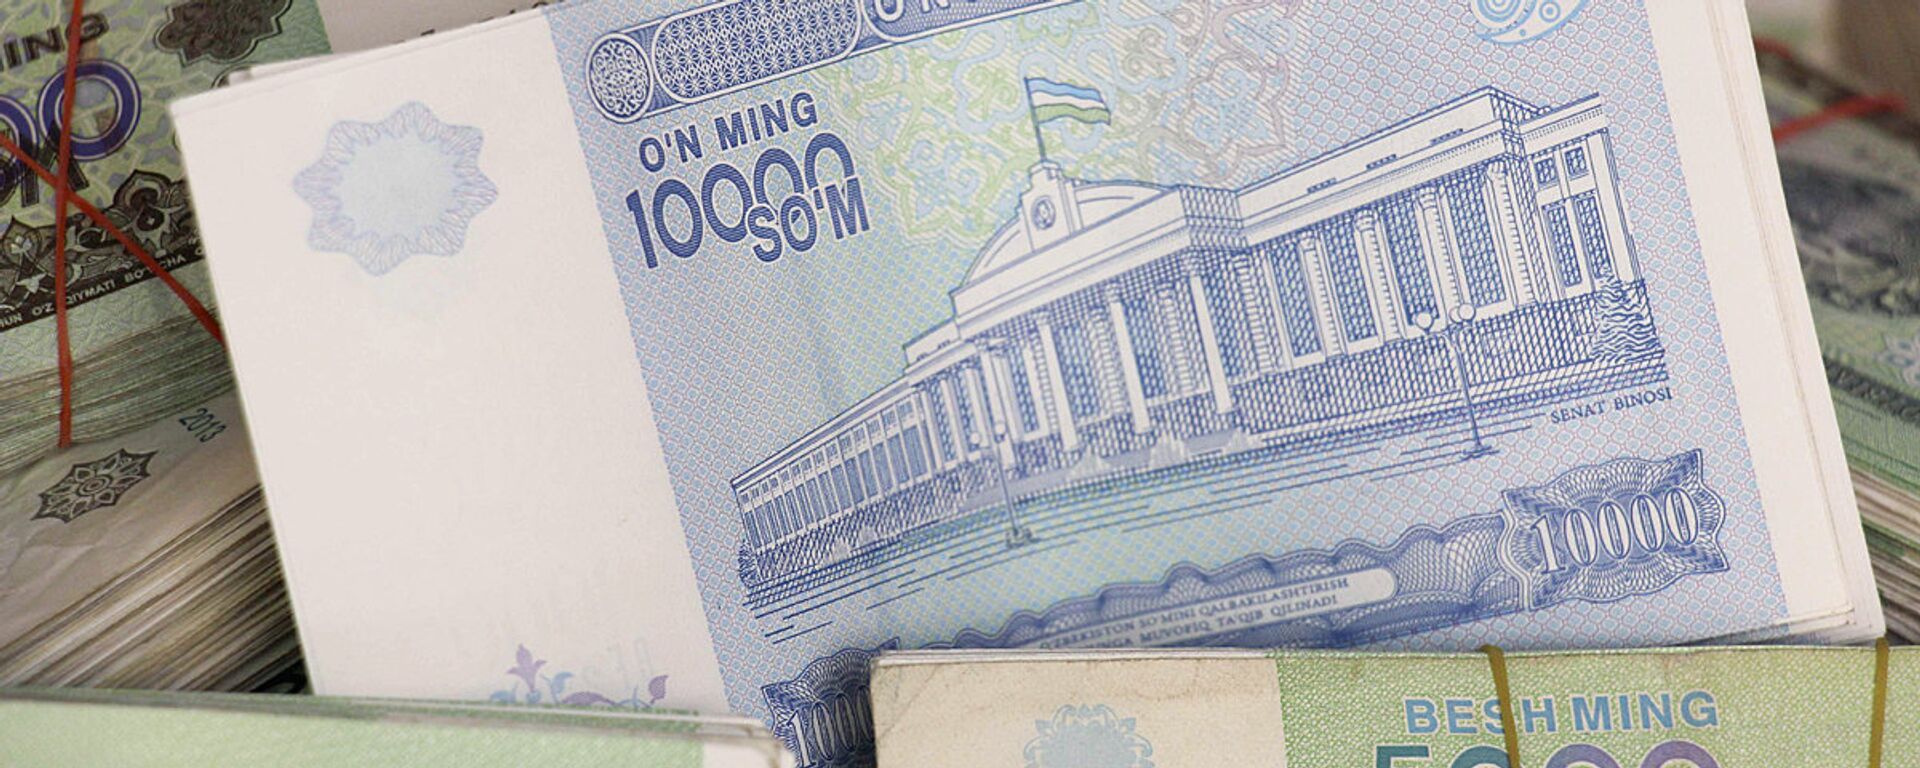 Узбекская валюта - сум - Sputnik Узбекистан, 1920, 10.09.2017